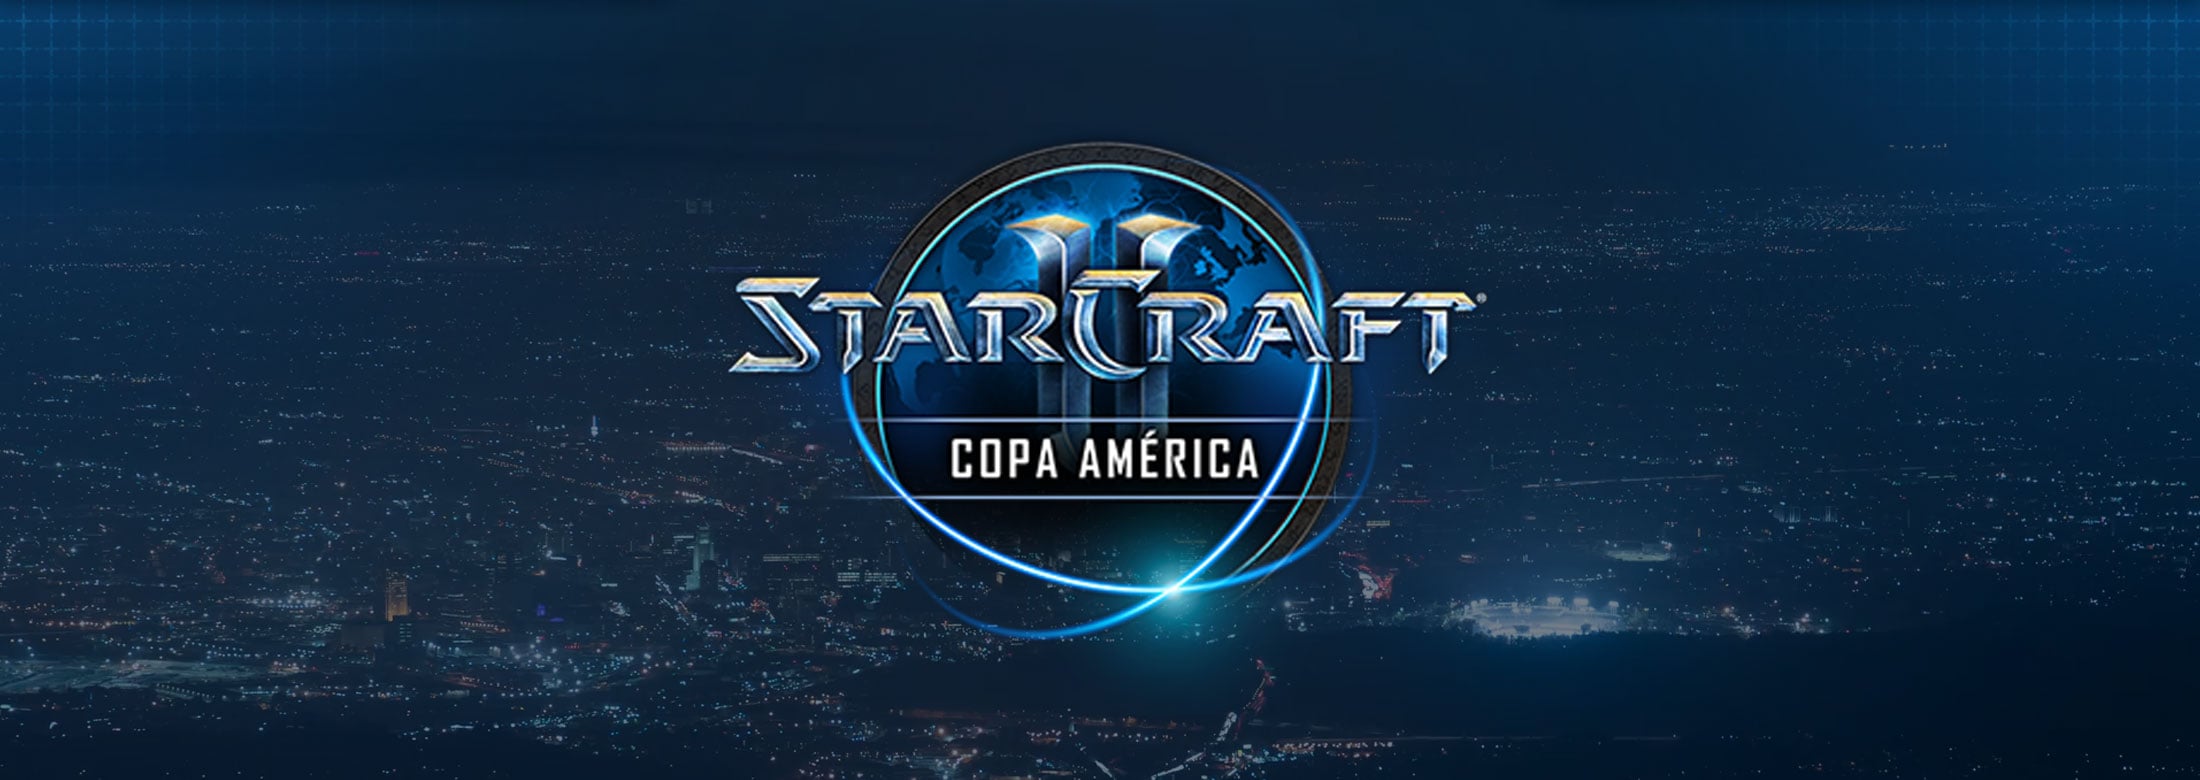 Assista à 1ª temporada da Copa América de StarCraft II 2019!